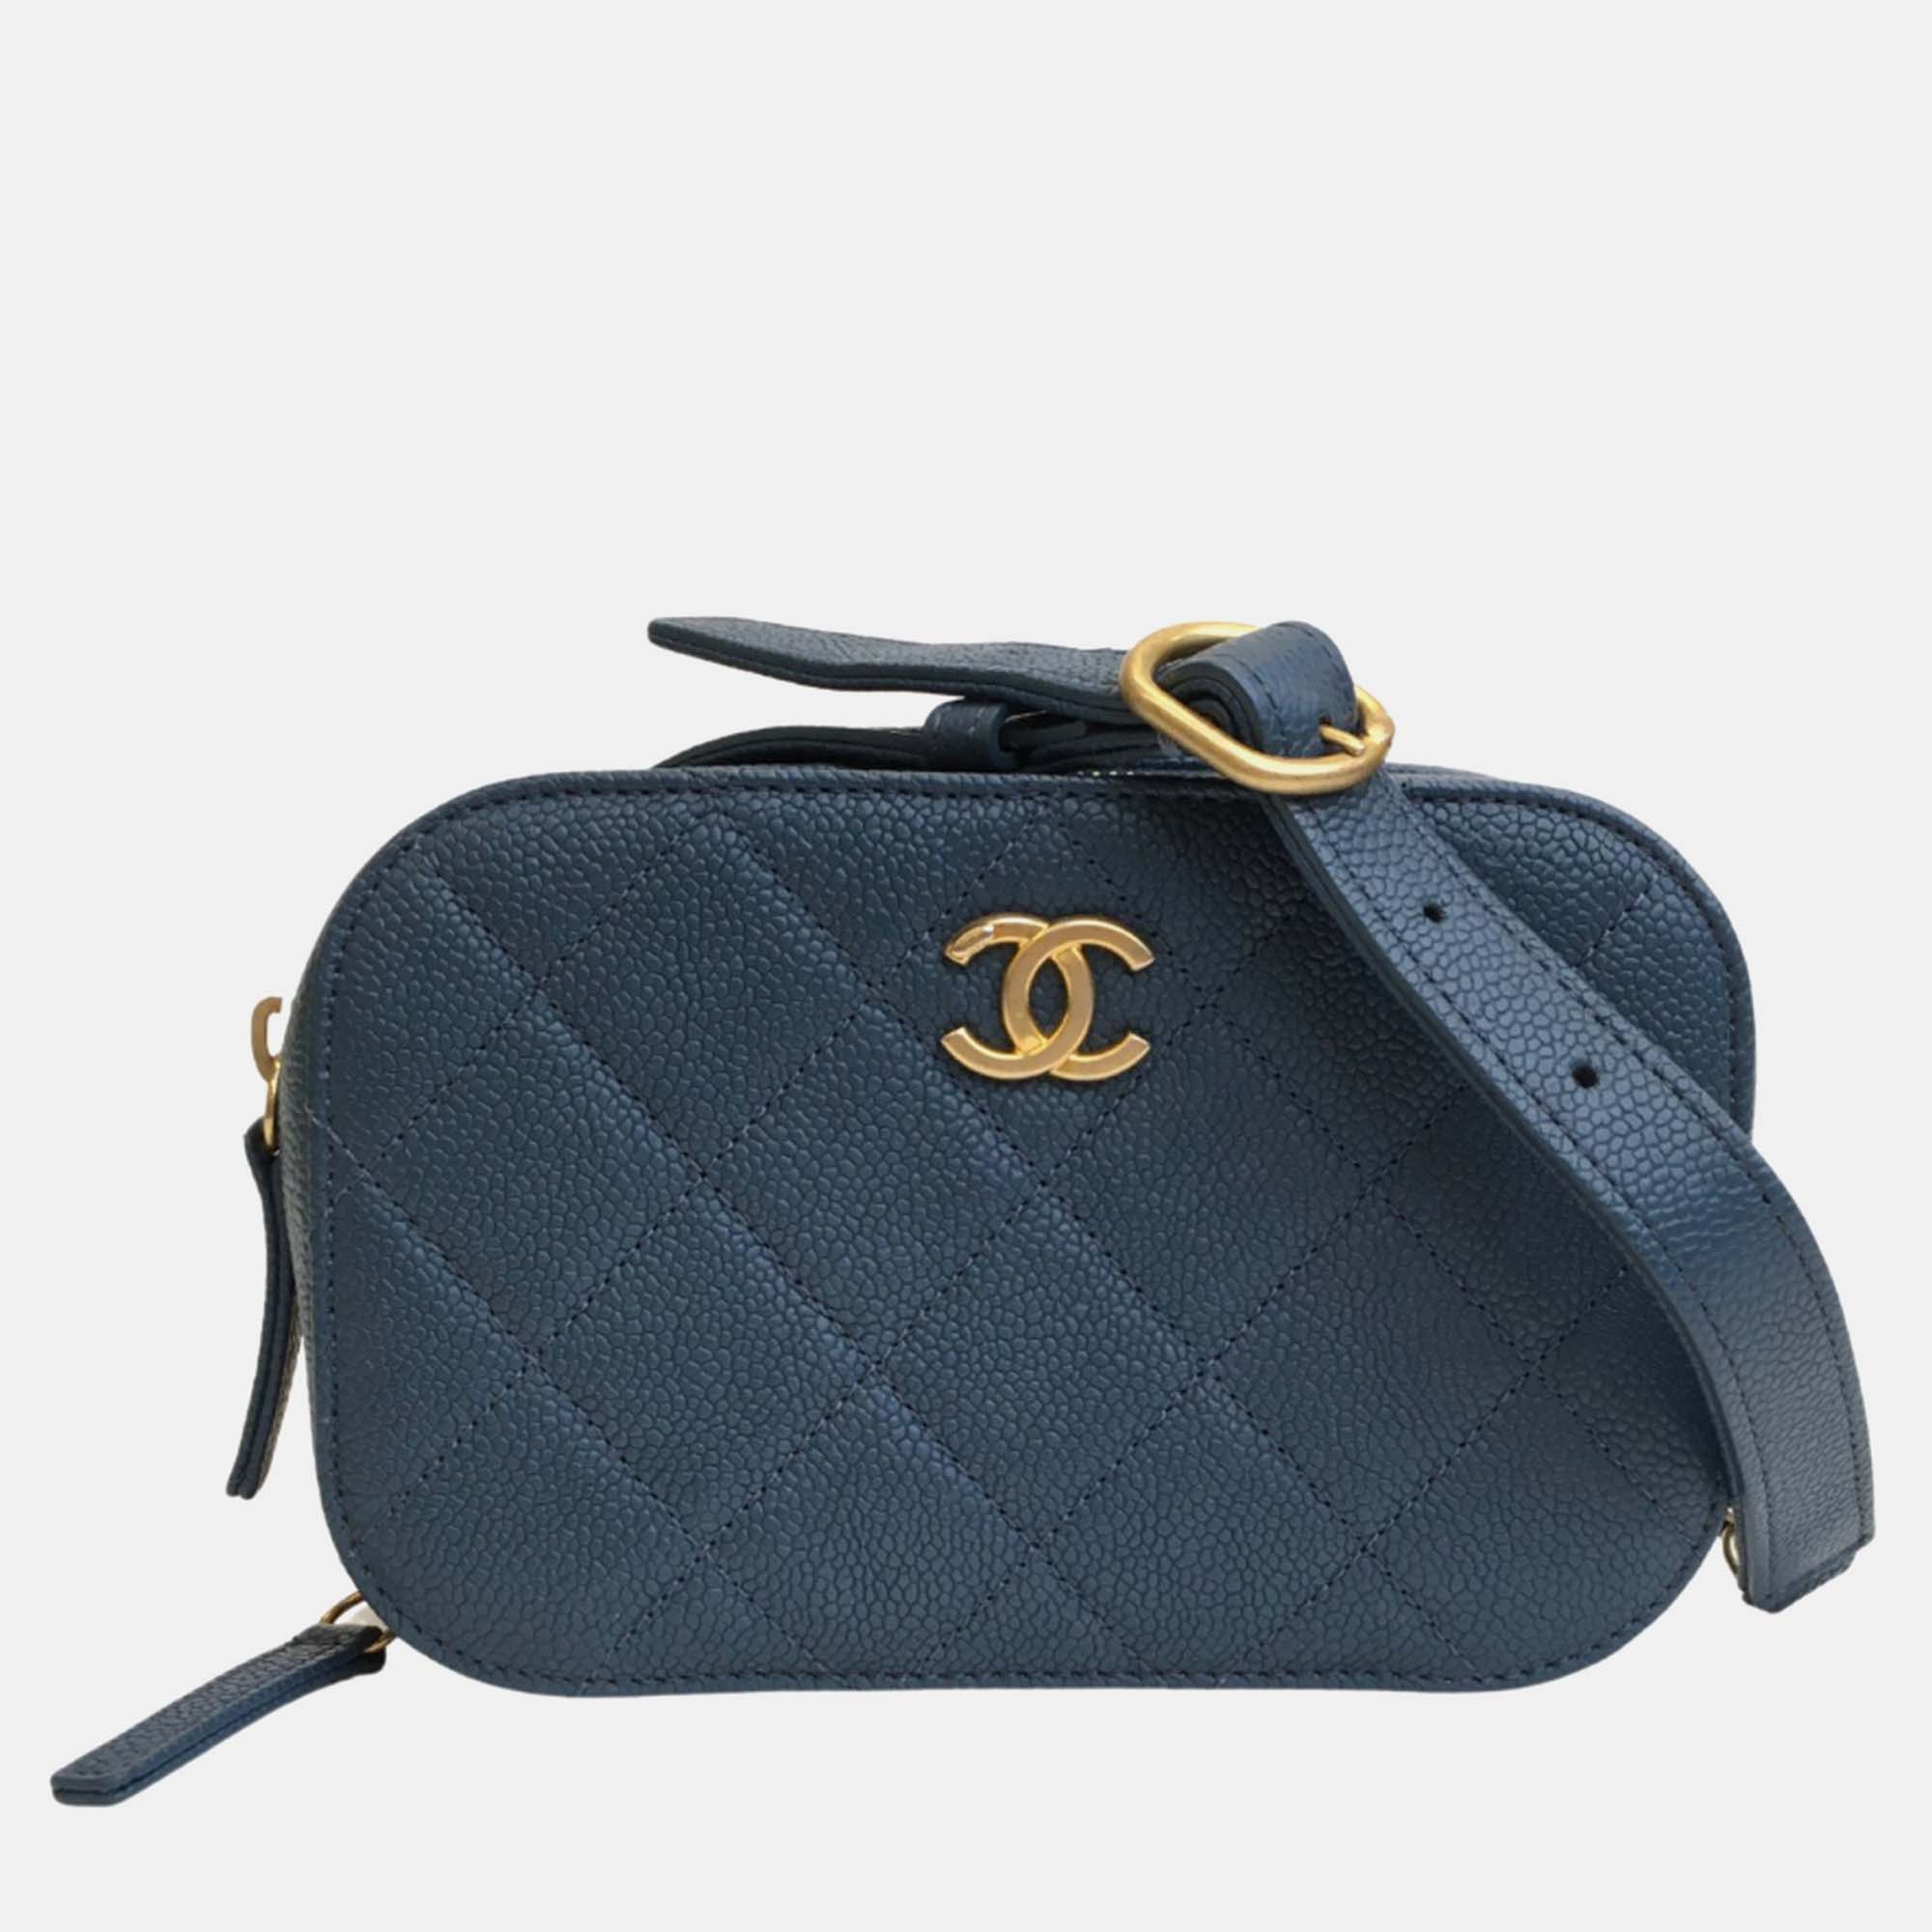 Chanel blue caviar leather belt bag